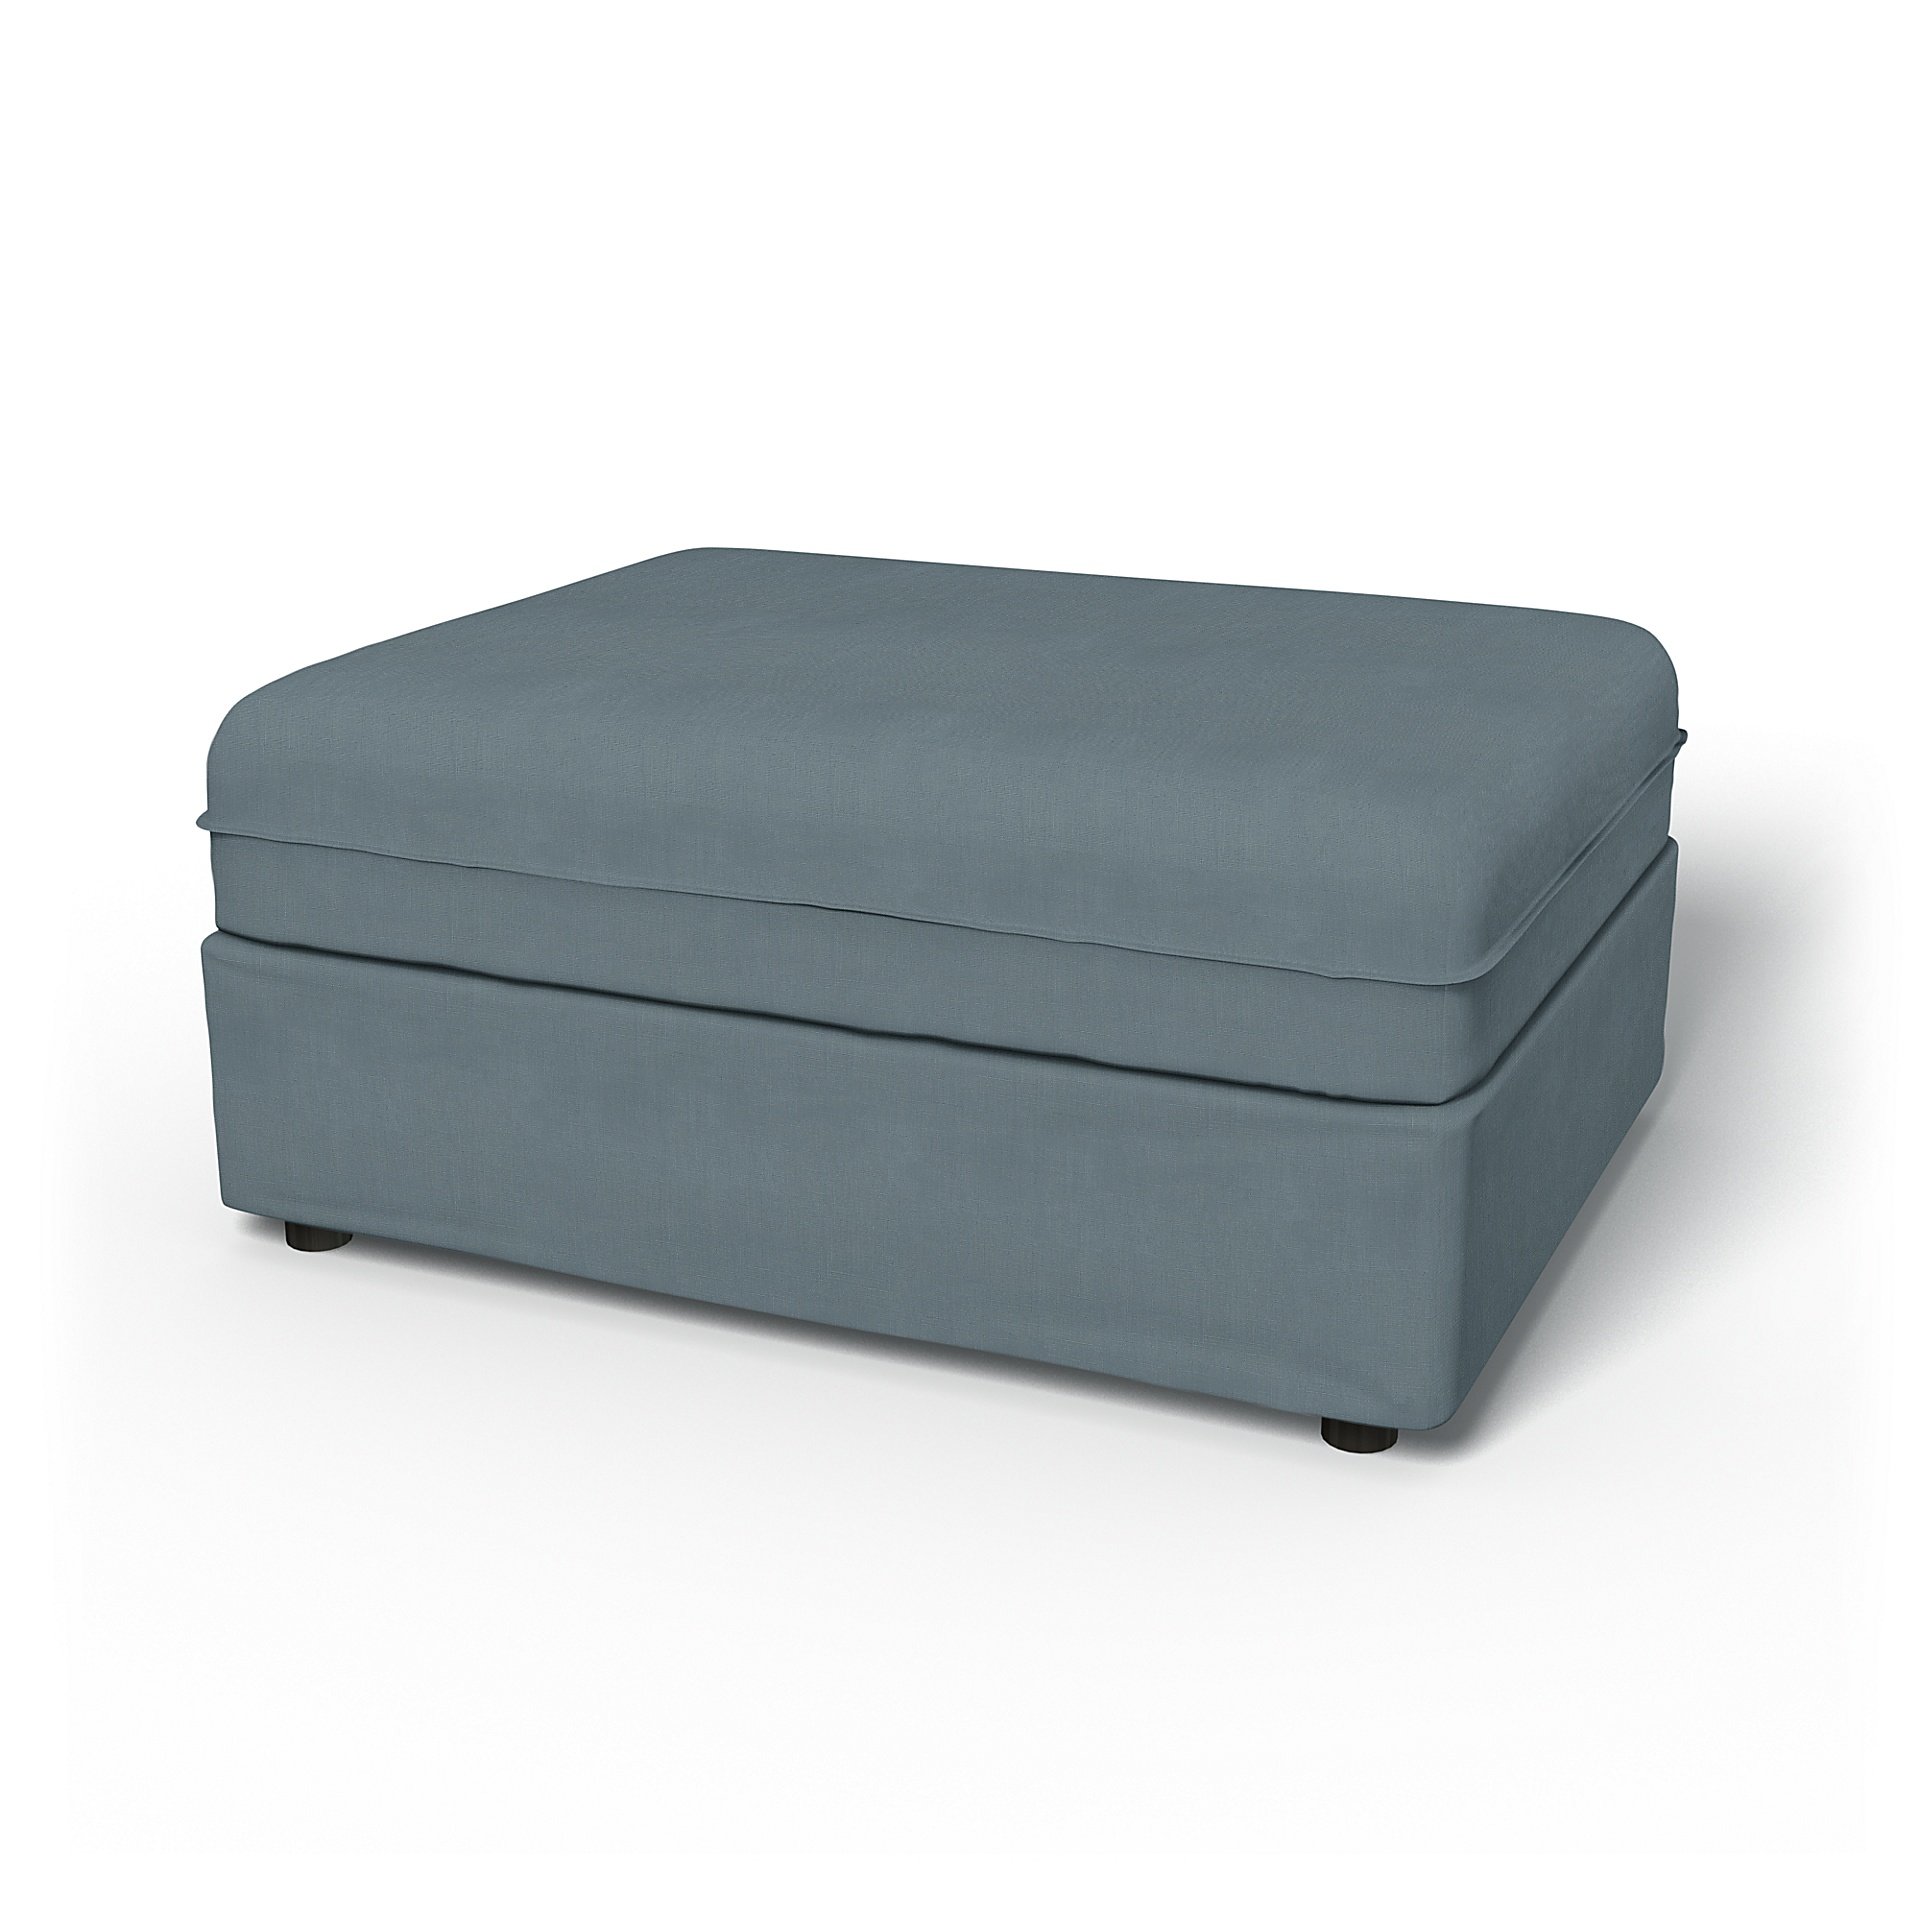 IKEA - Vallentuna Seat Module Cover 100x80cm 39x32in, Dusk, Linen - Bemz